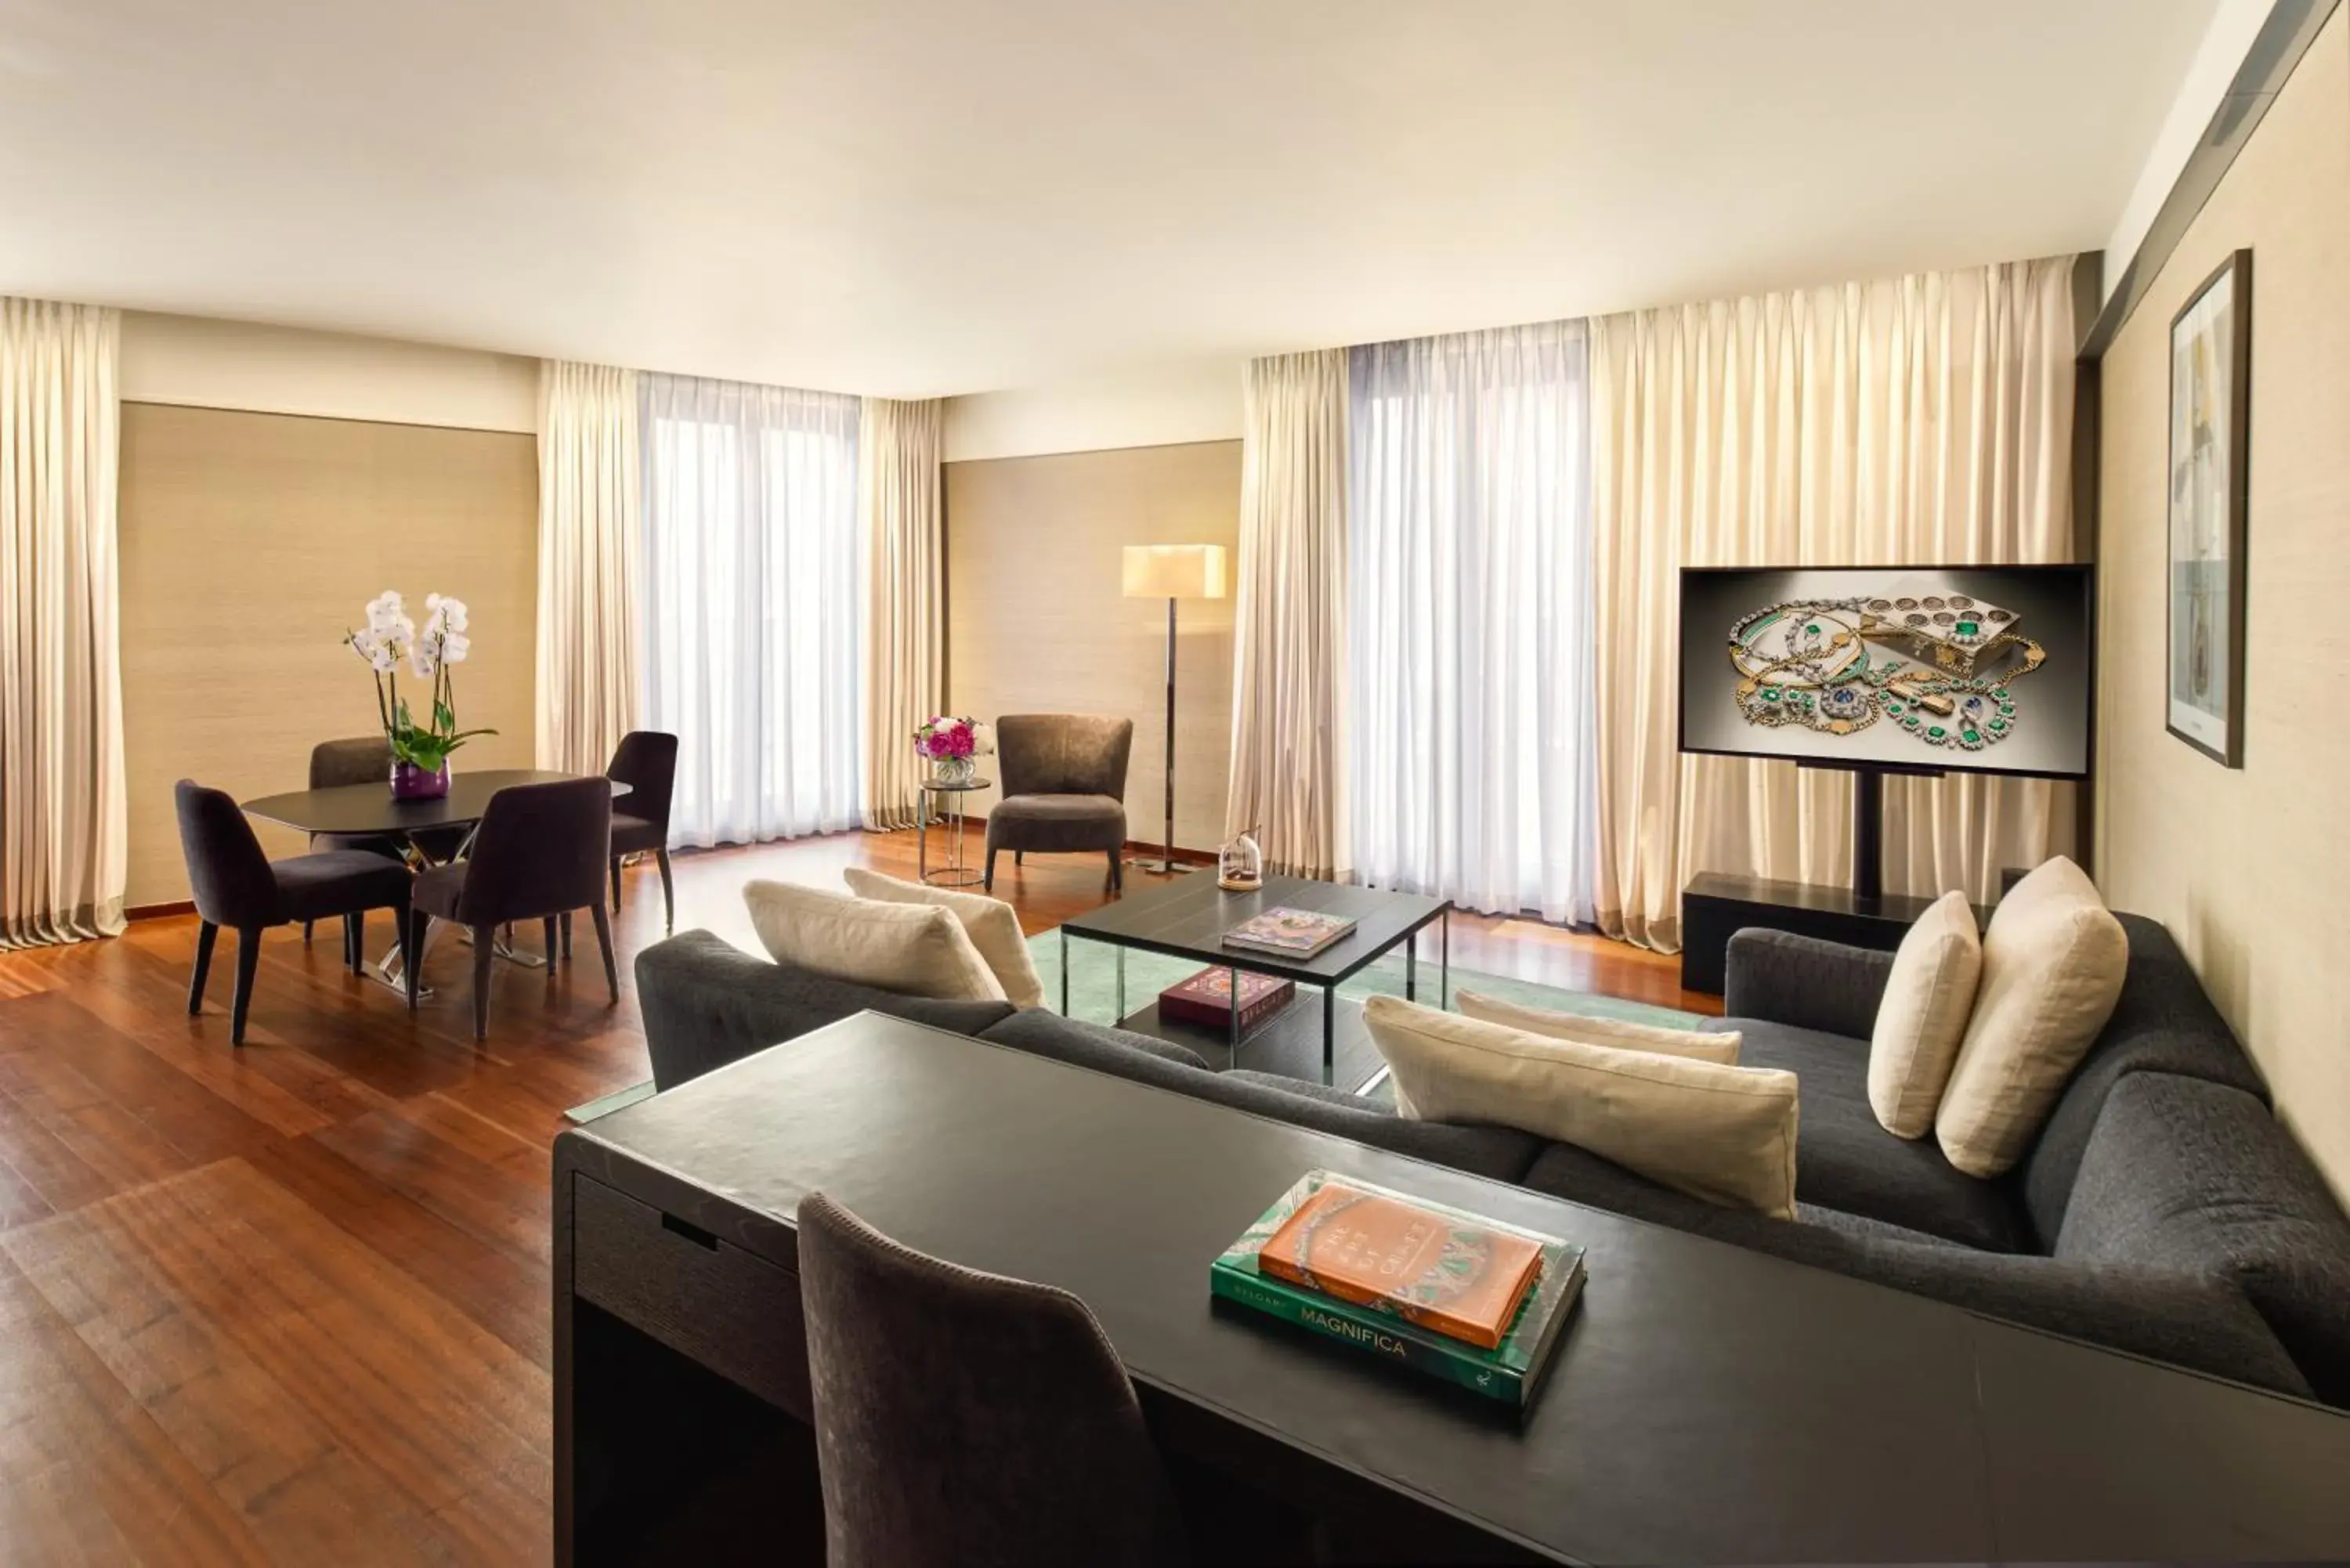 TV and multimedia, Seating Area in Bulgari Hotel London